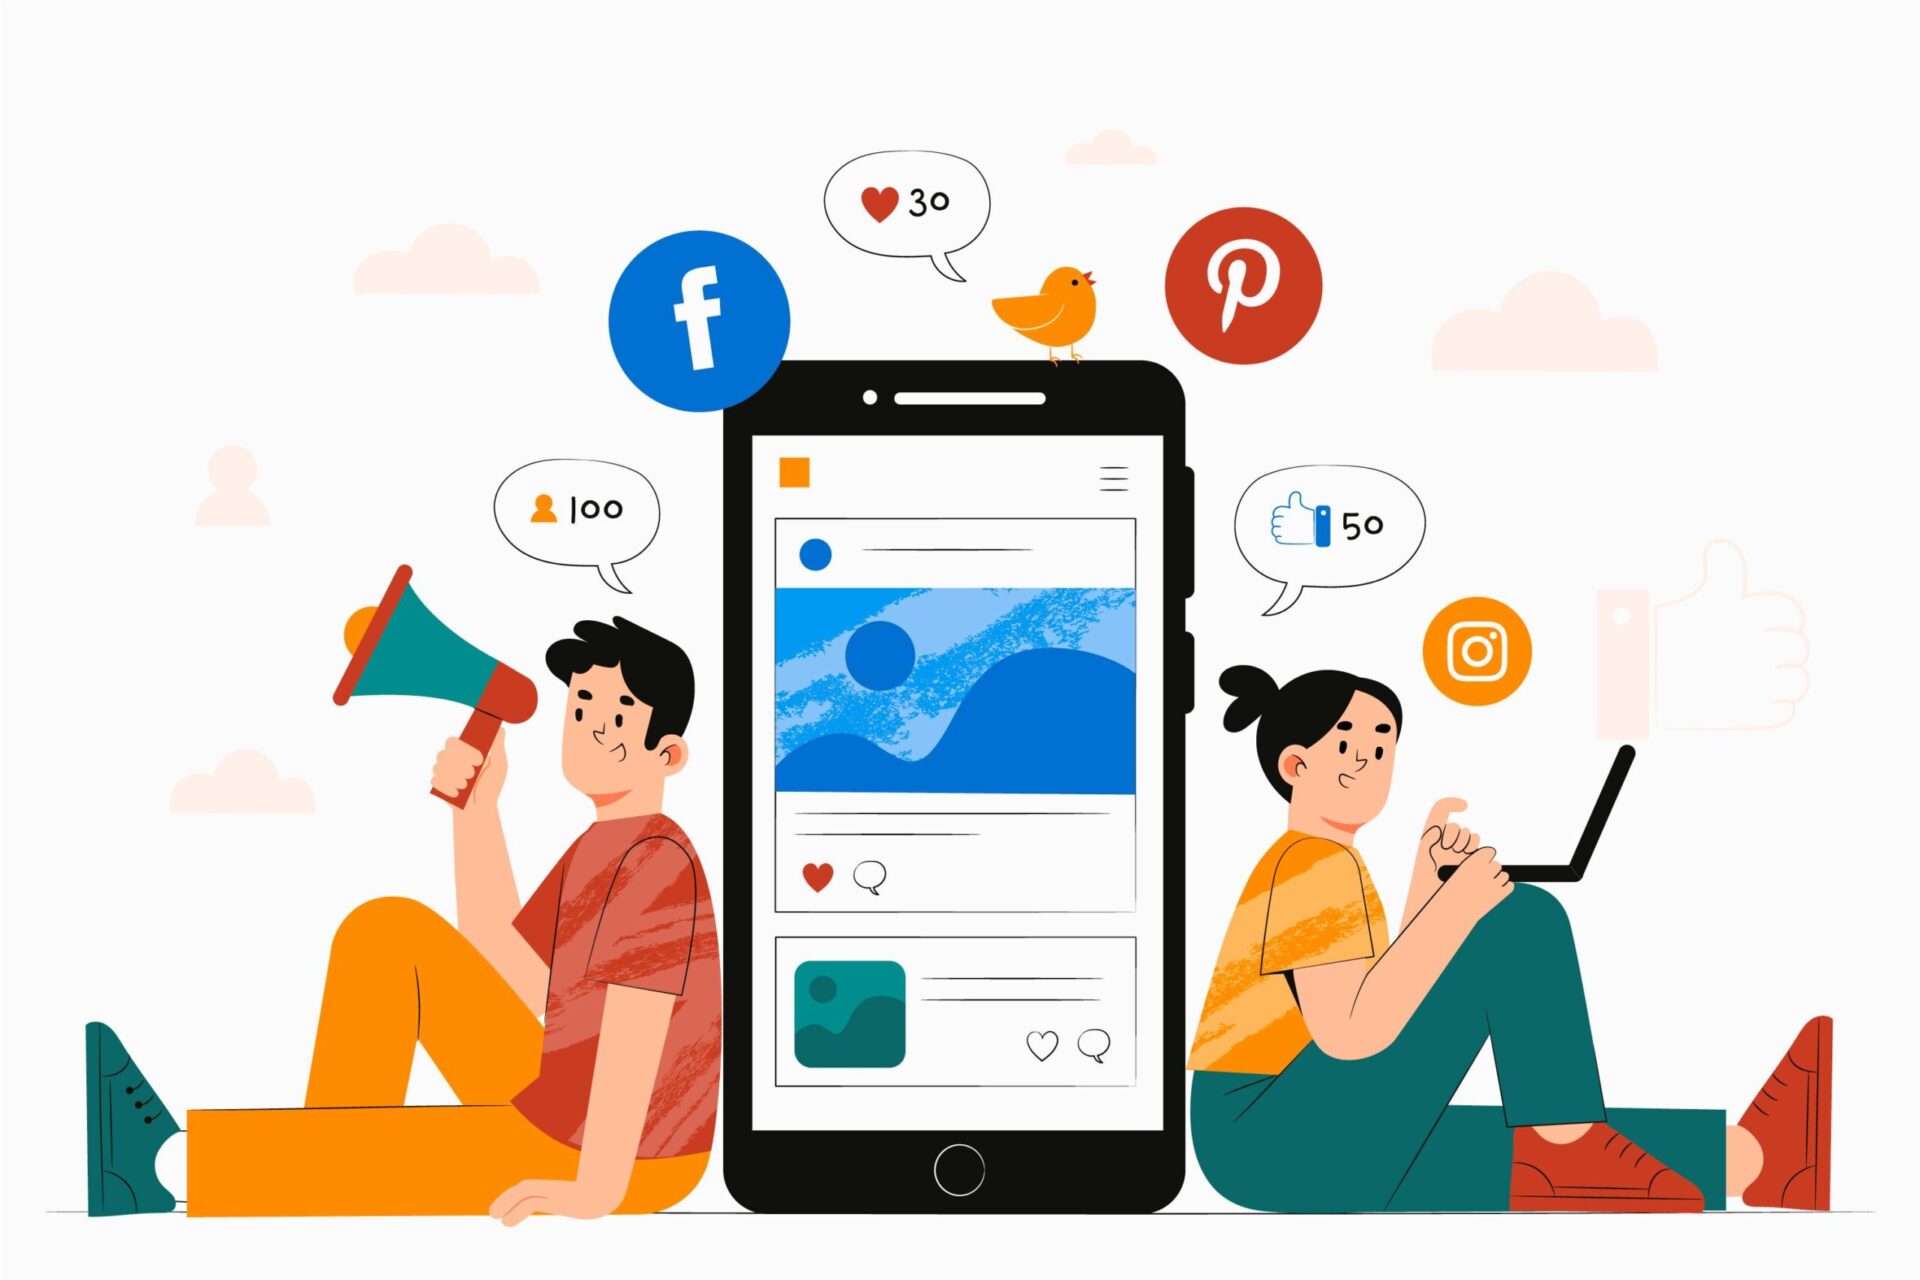 engaging into social media marketing through a phone